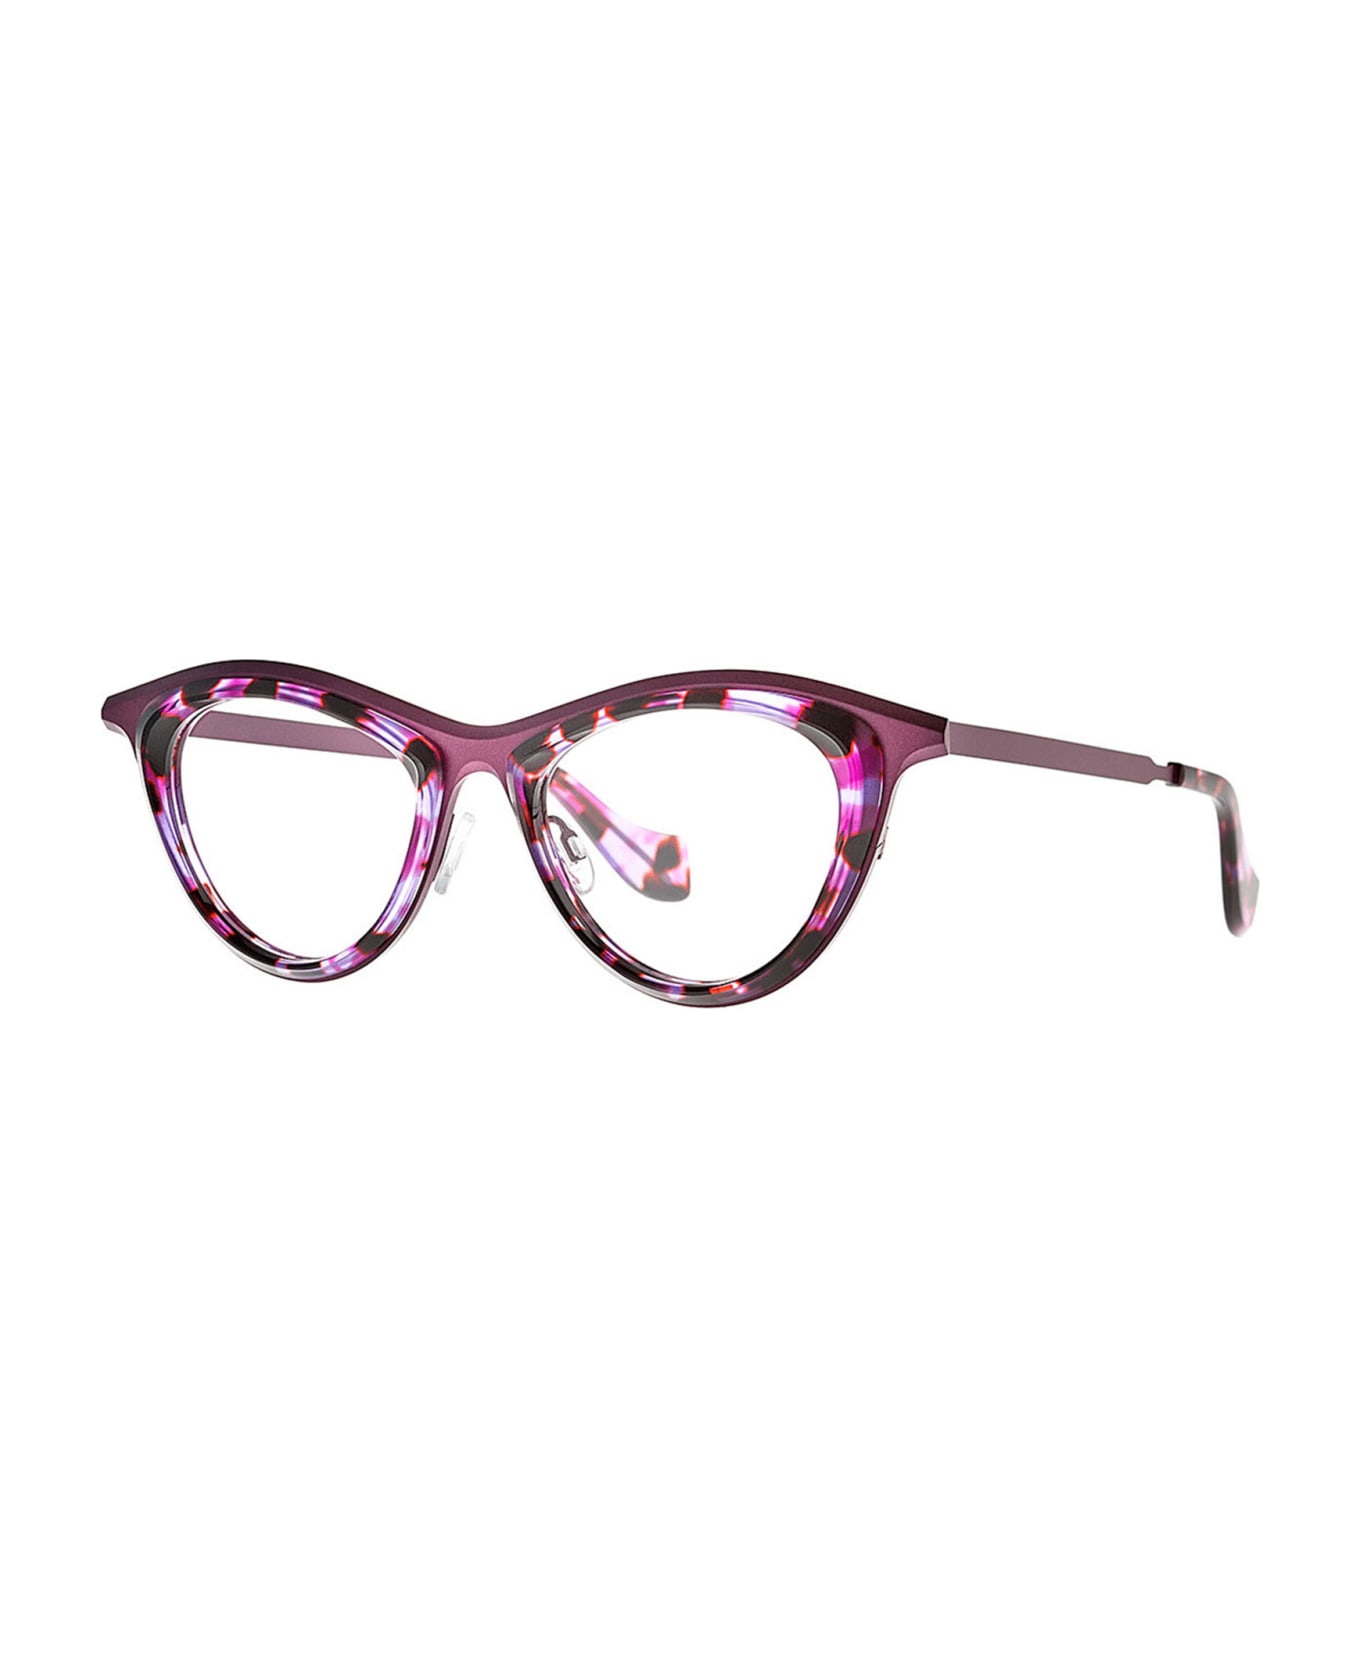 Theo Eyewear Pave - 005 Purple Rx Glasses - purple